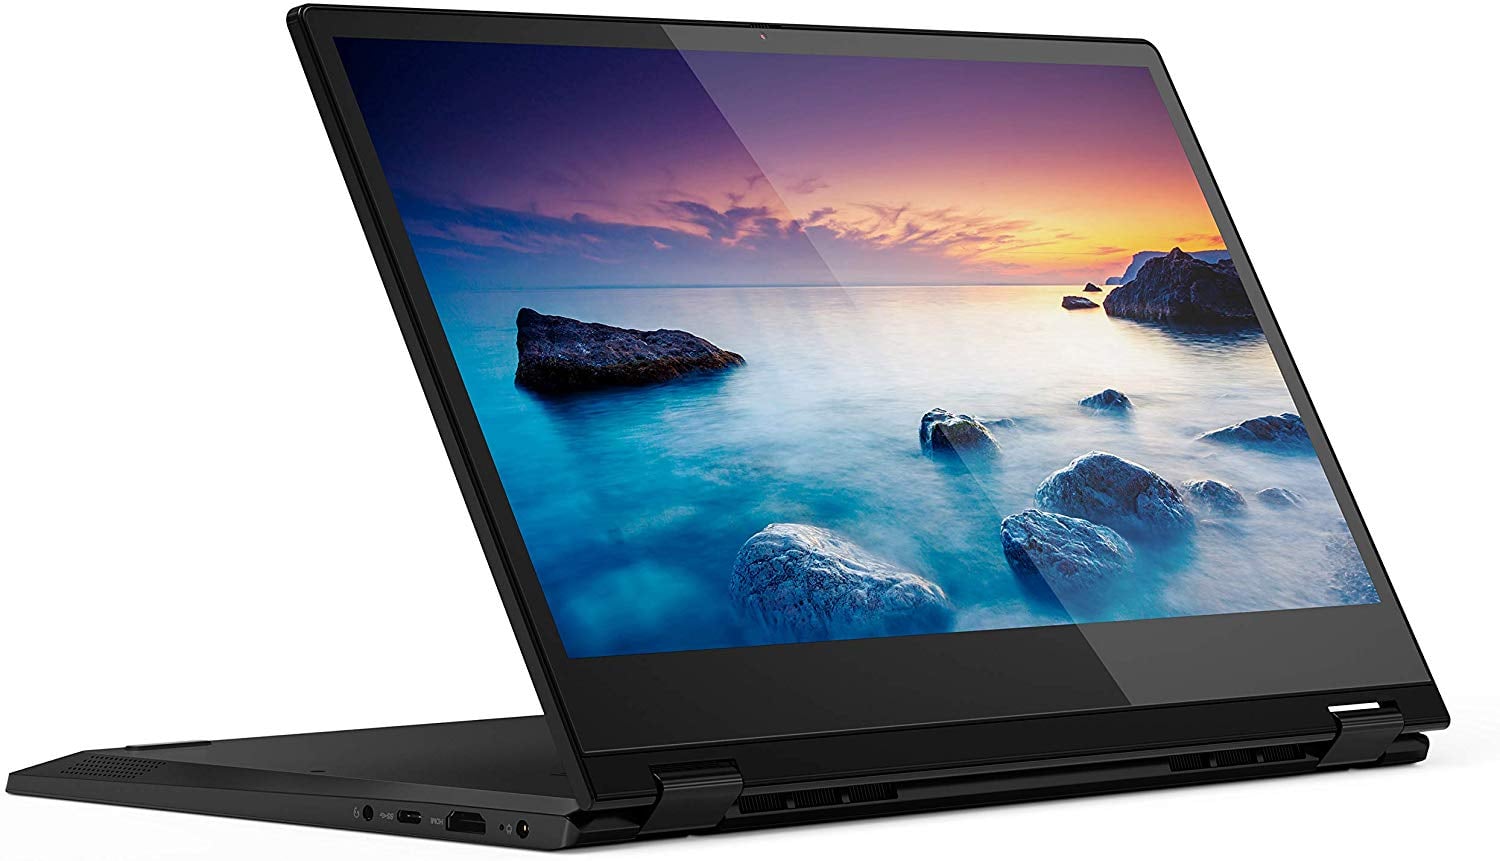 Lenovo Flex 14 Convertible Laptop for $459.00 (REG $523.48)